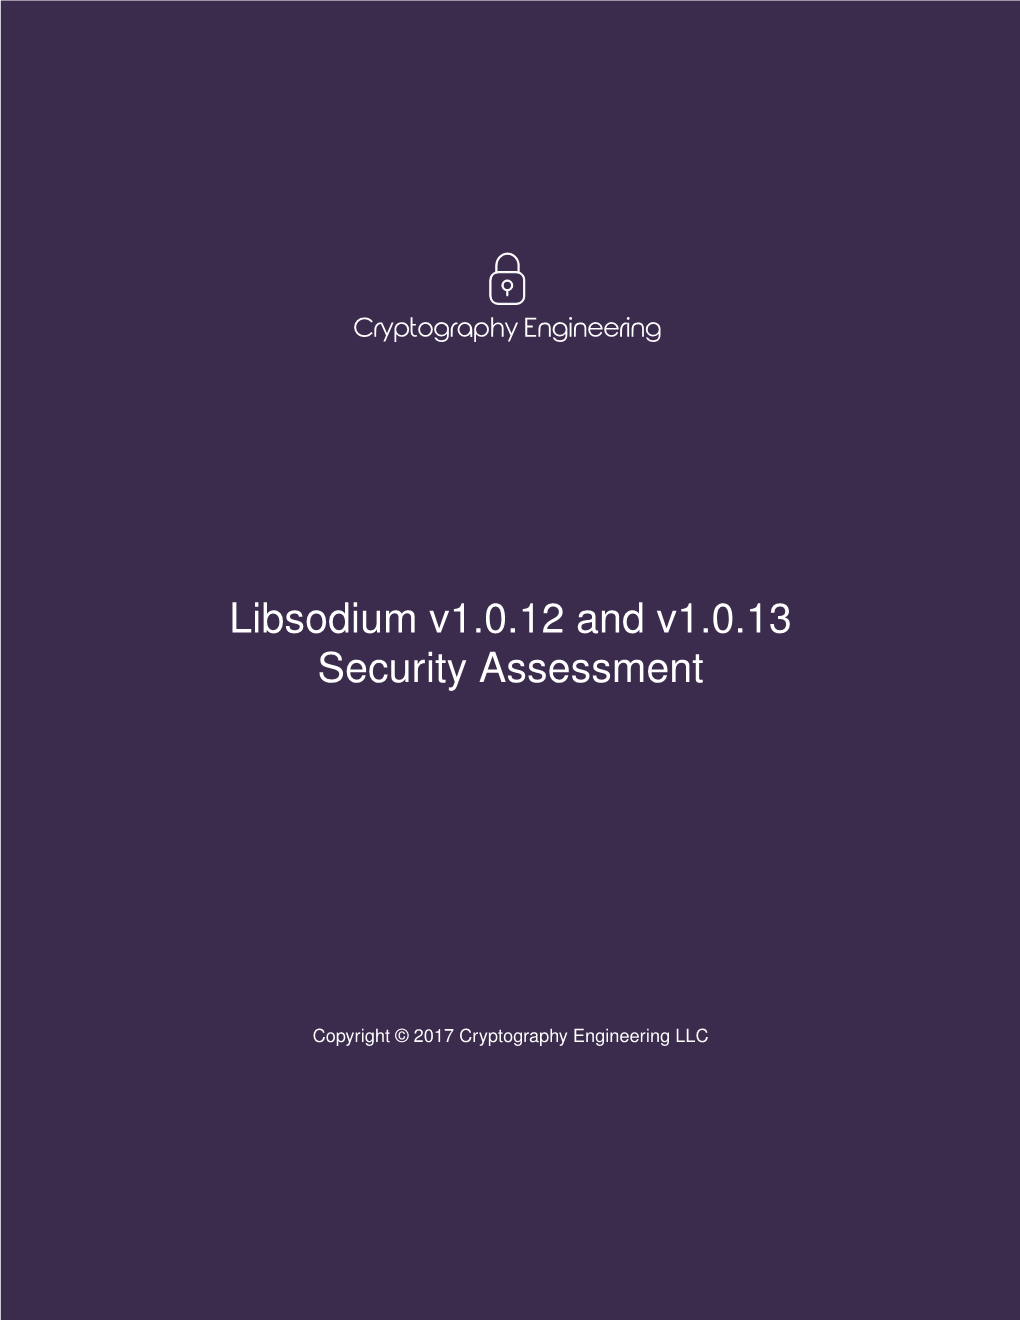 Libsodium V1.0.12 and V1.0.13 Security Assessment